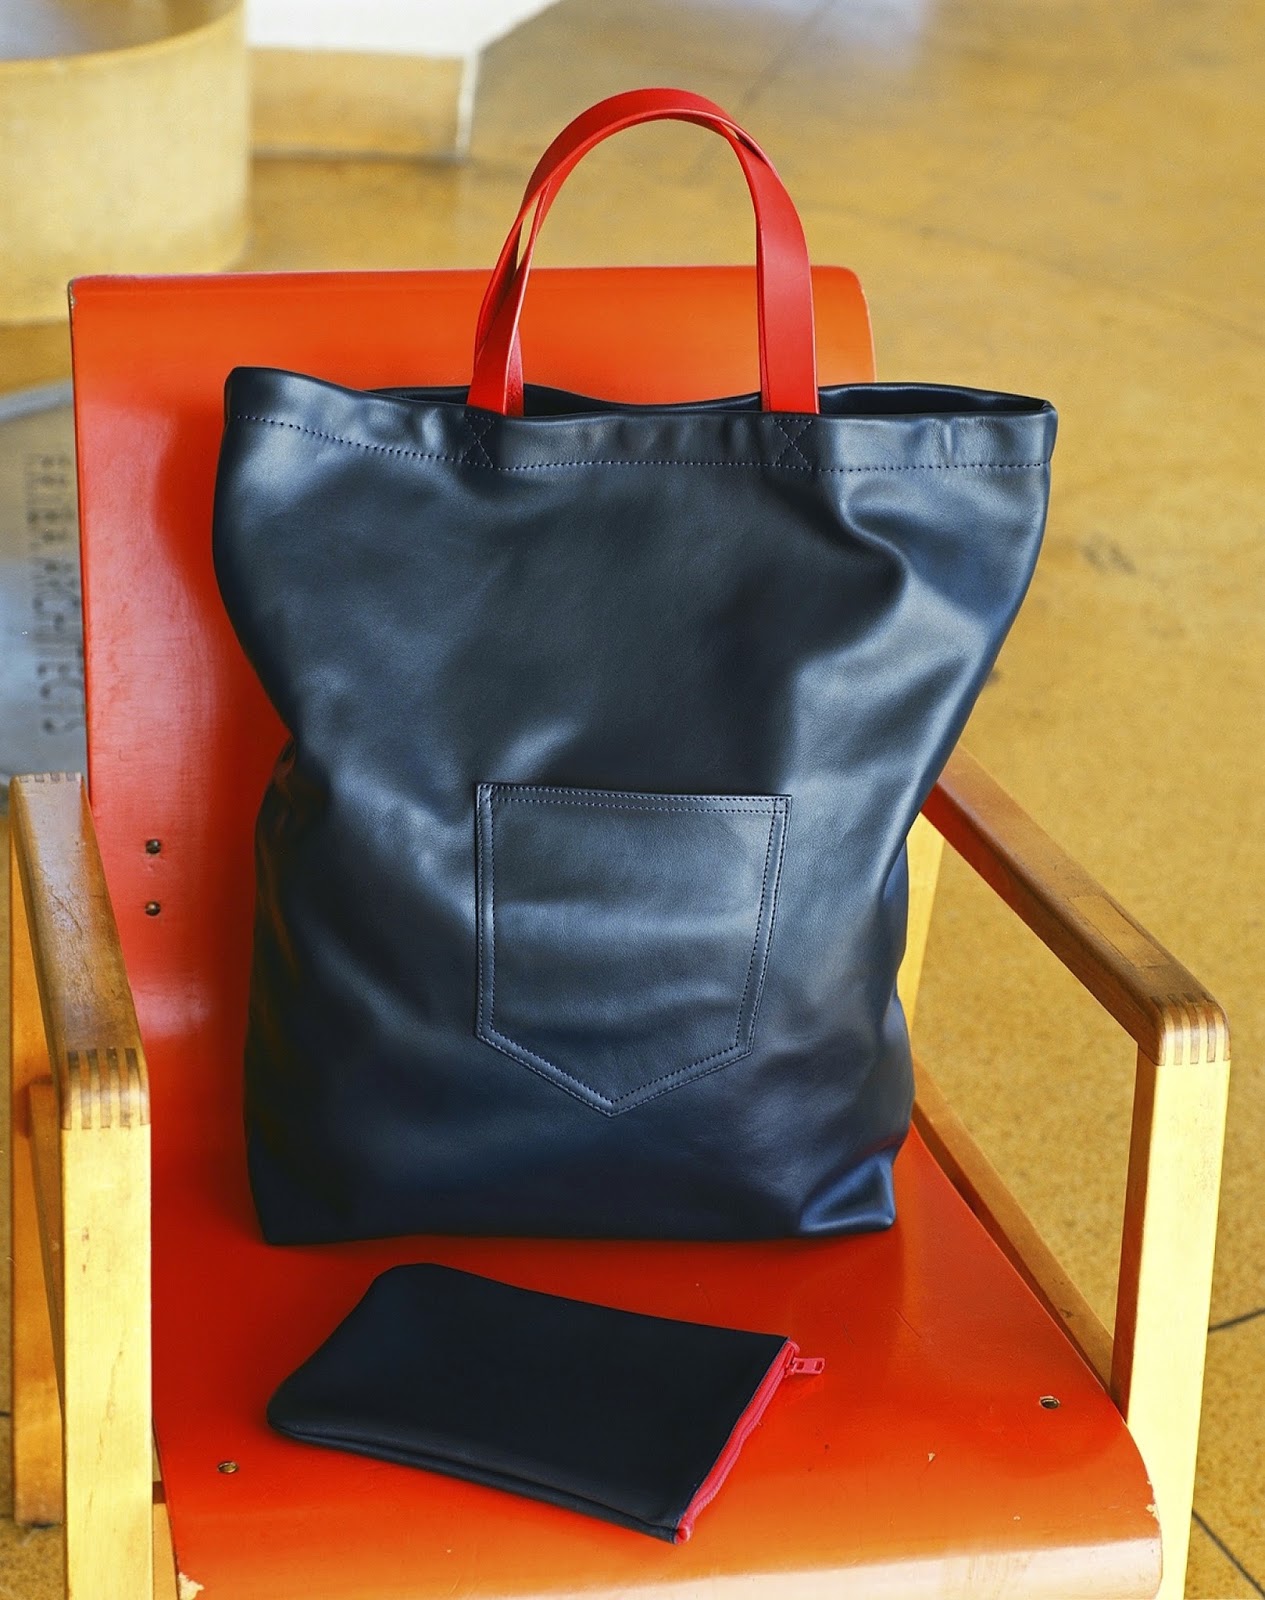 The Nose Bag © Concrete Collaborations, Concrete Editions, Maiko Dawson, Resolve An intimate survey of work, De La Warr Pavilion, Italian Veneto Leather, Accessories